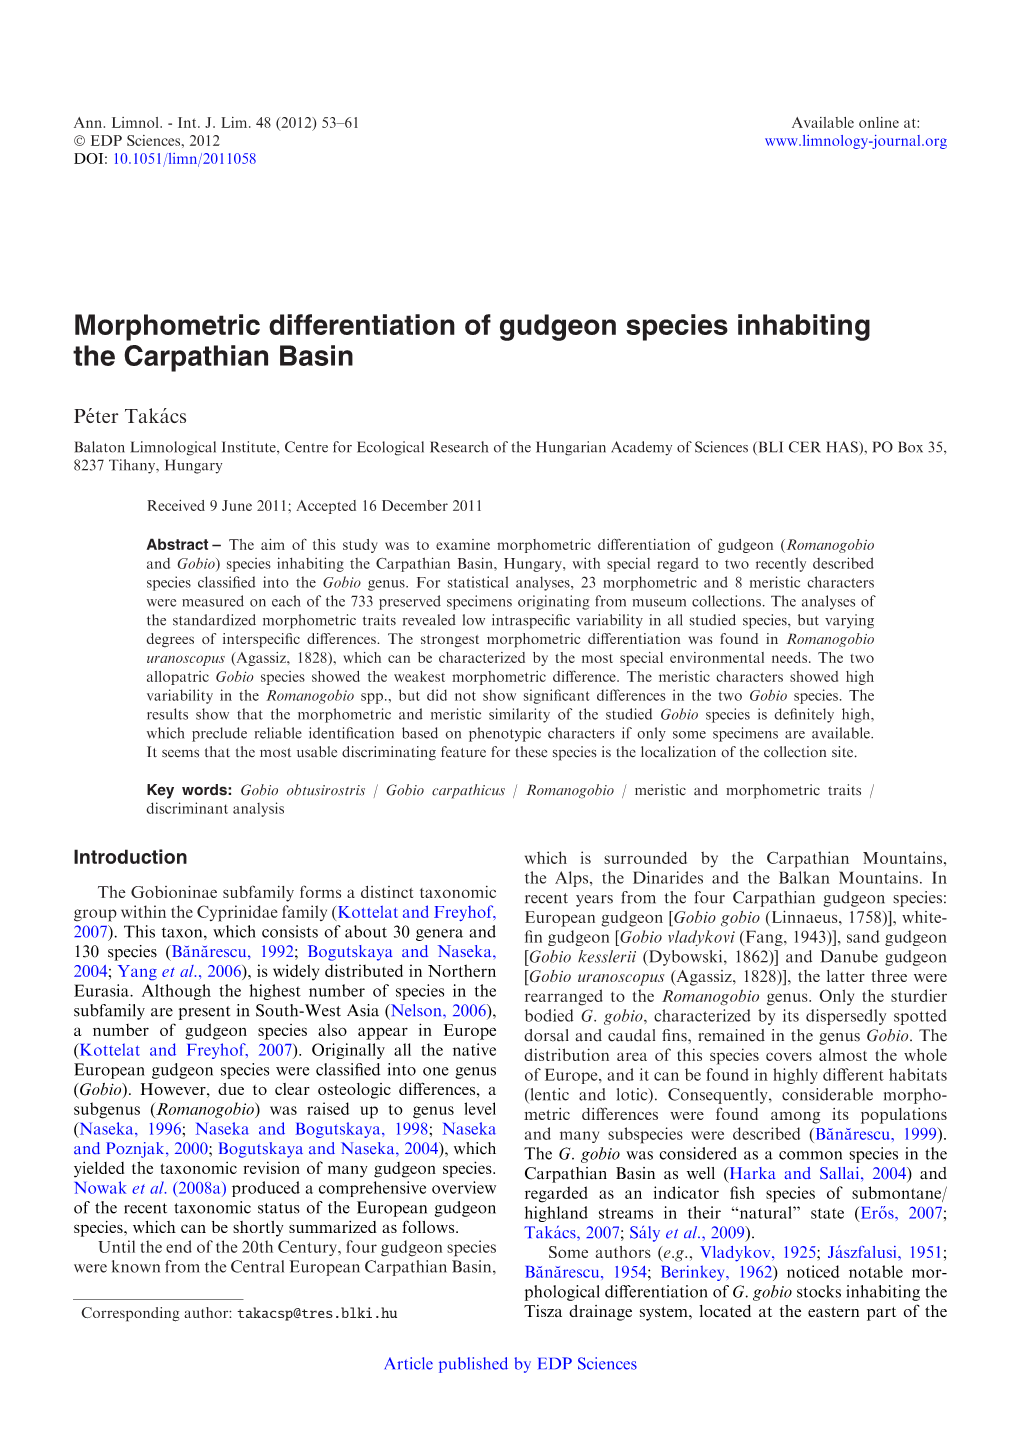 Morphometric Differentiation of Gudgeon Species Inhabiting the Carpathian Basin